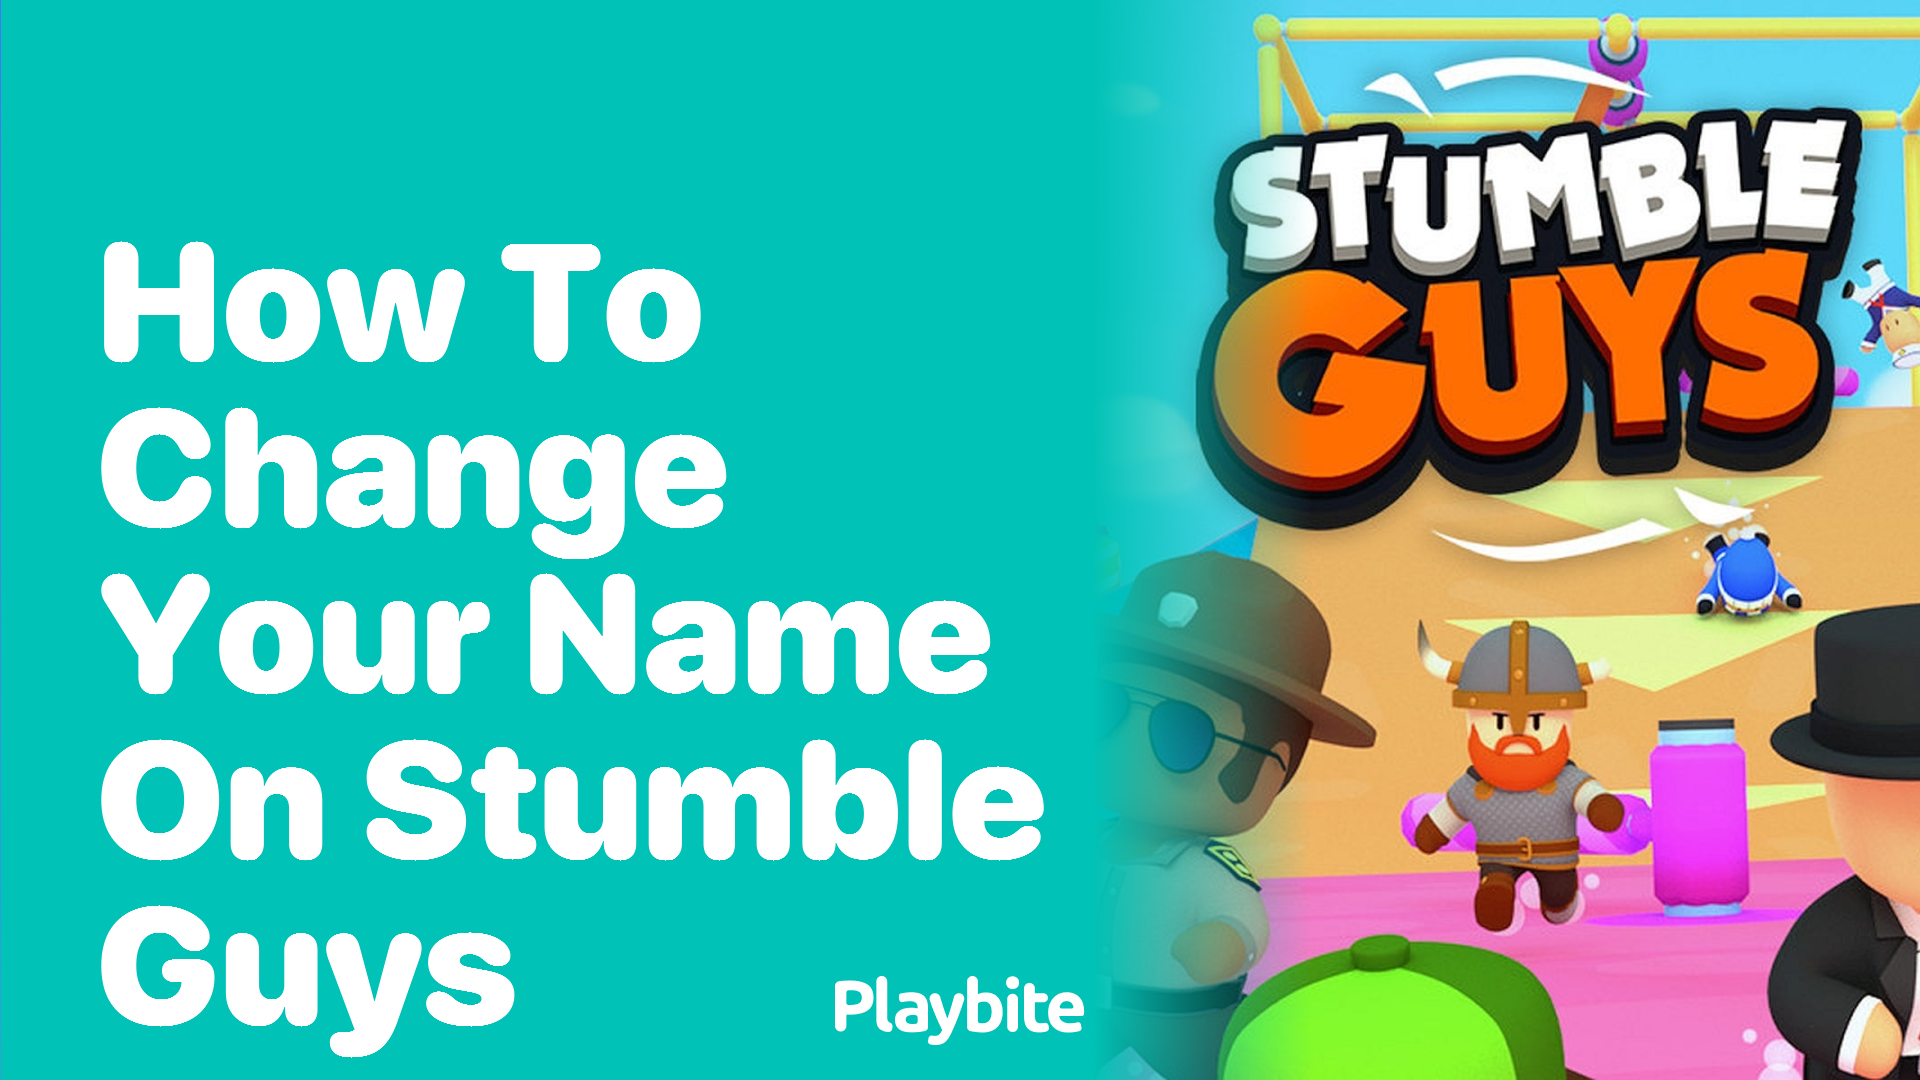 How to Change Your Name on Stumble Guys